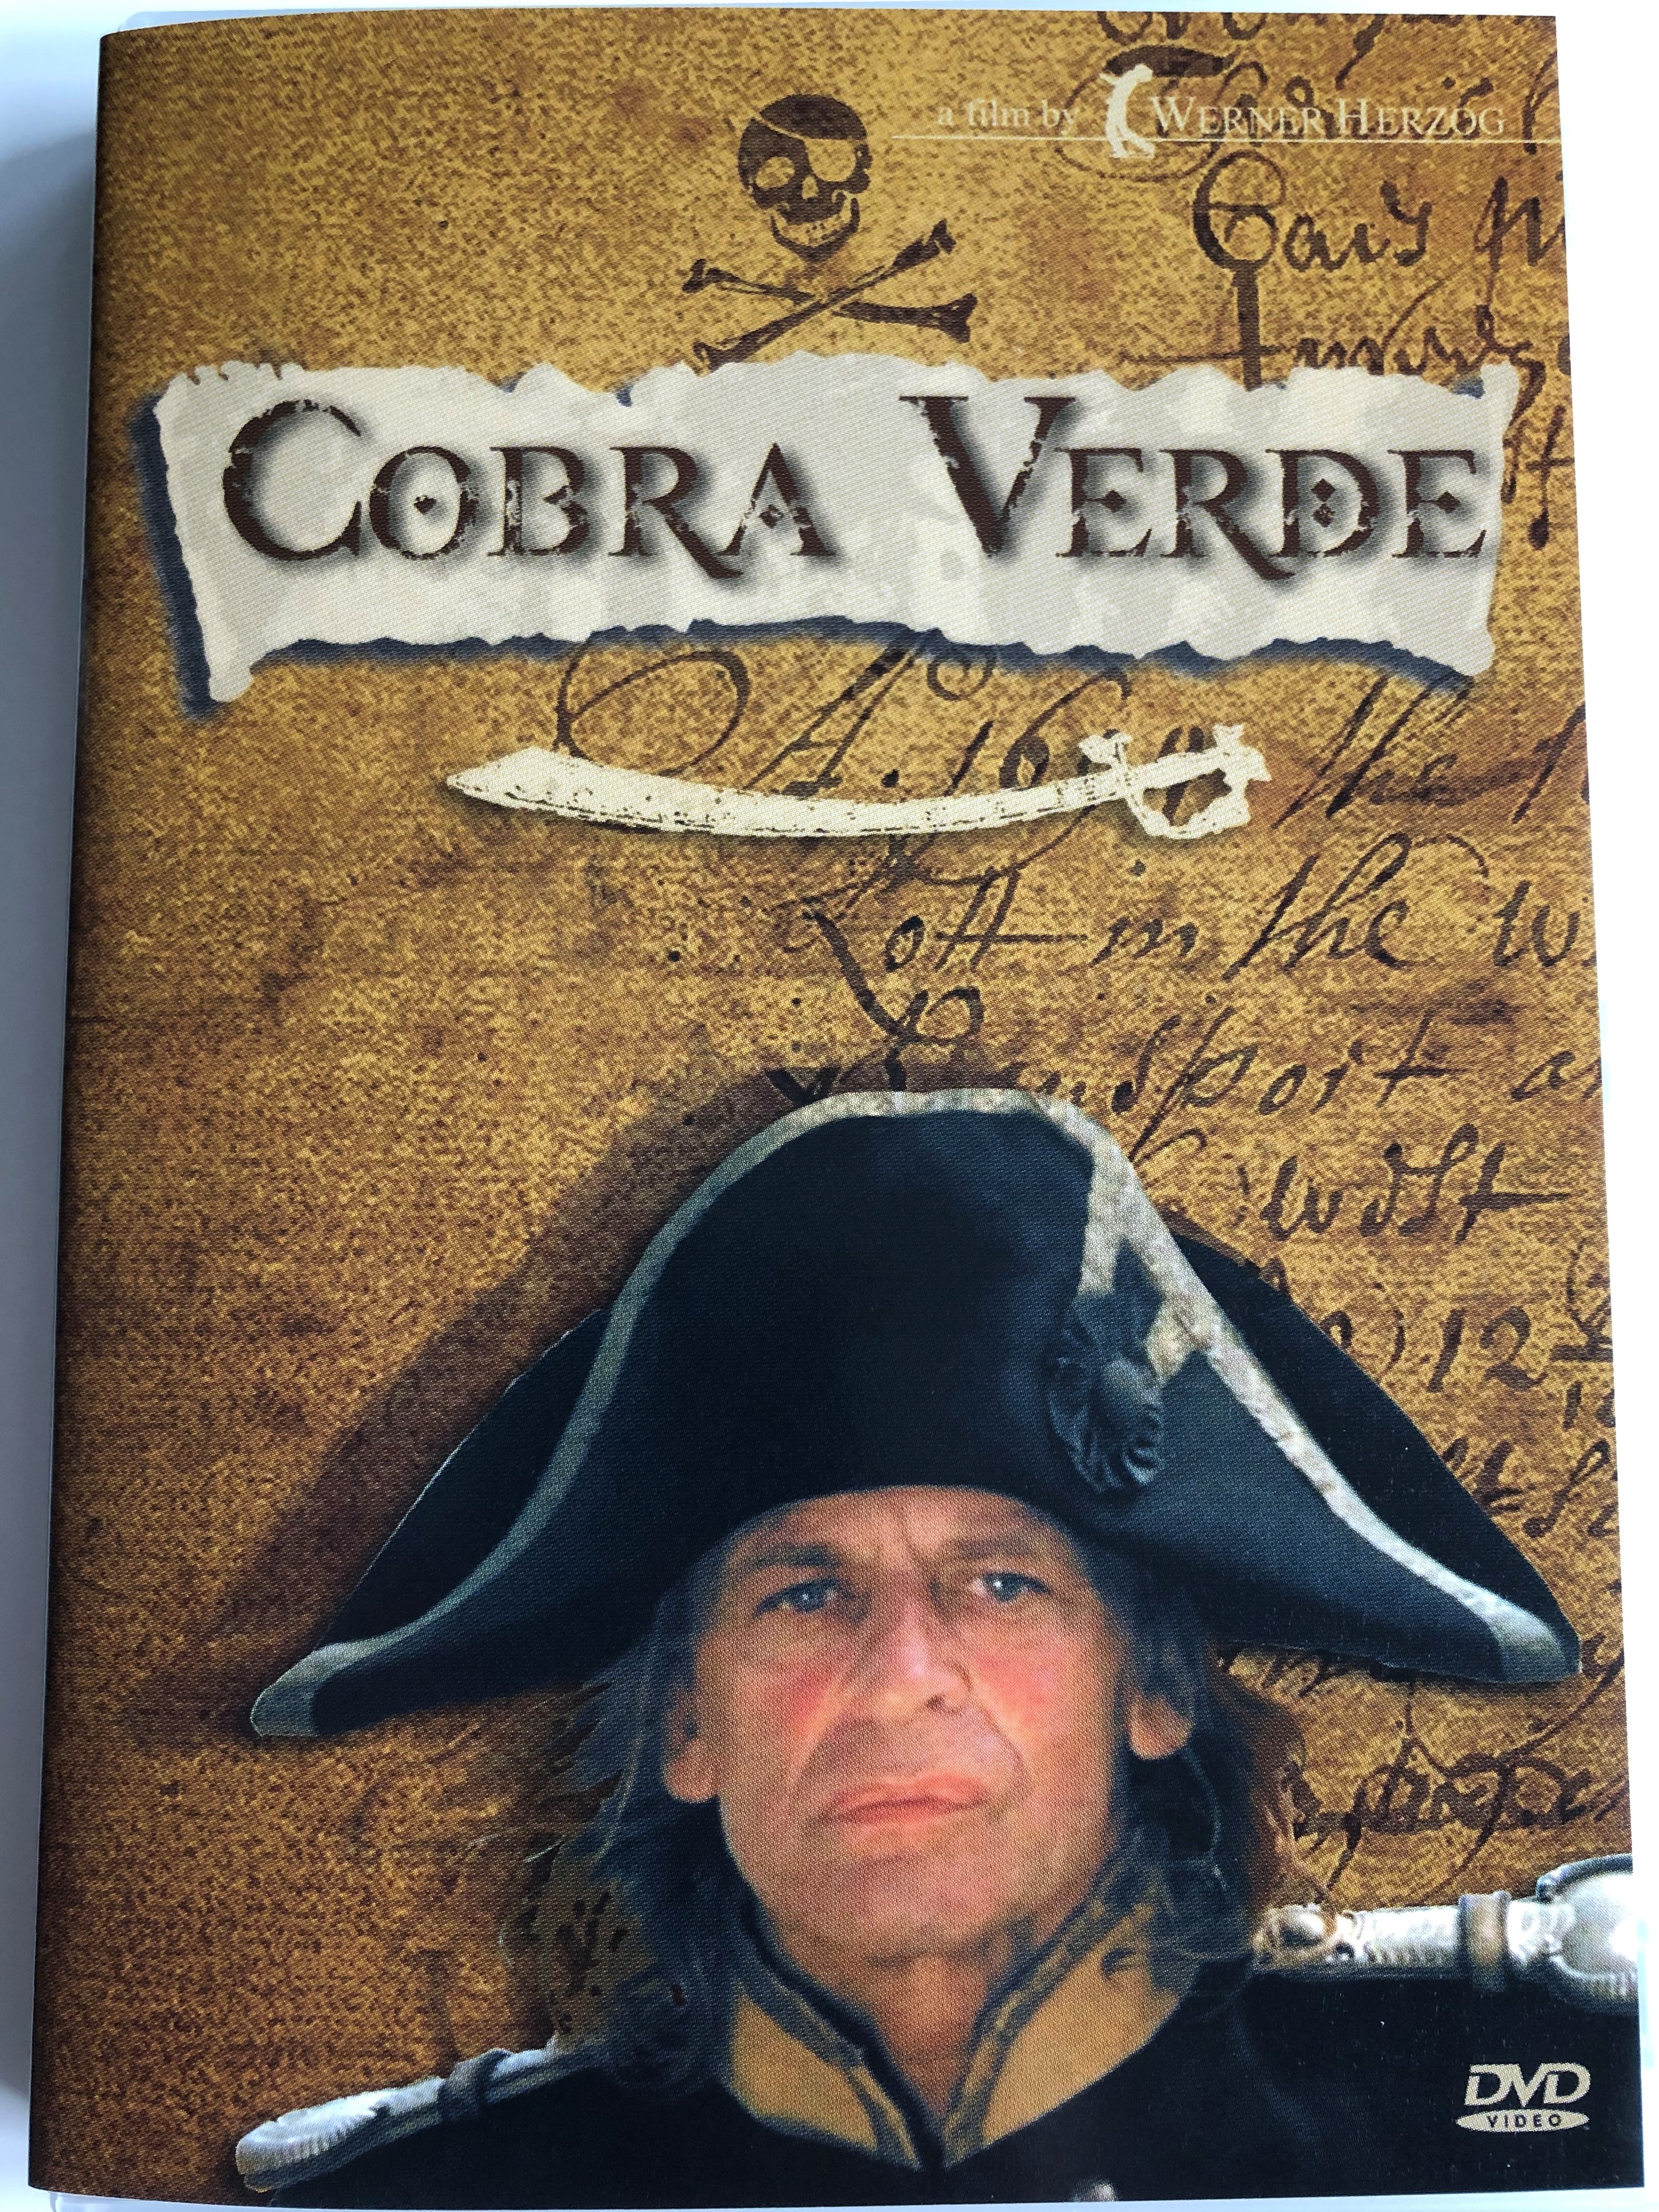 Cobra Verde DVD 1987 Slave Coast / Directed by Werner Herzog / Starring:  Klaus Kinski, King Ampaw, Jose Lewgoy, Salvatore Basile - bibleinmylanguage